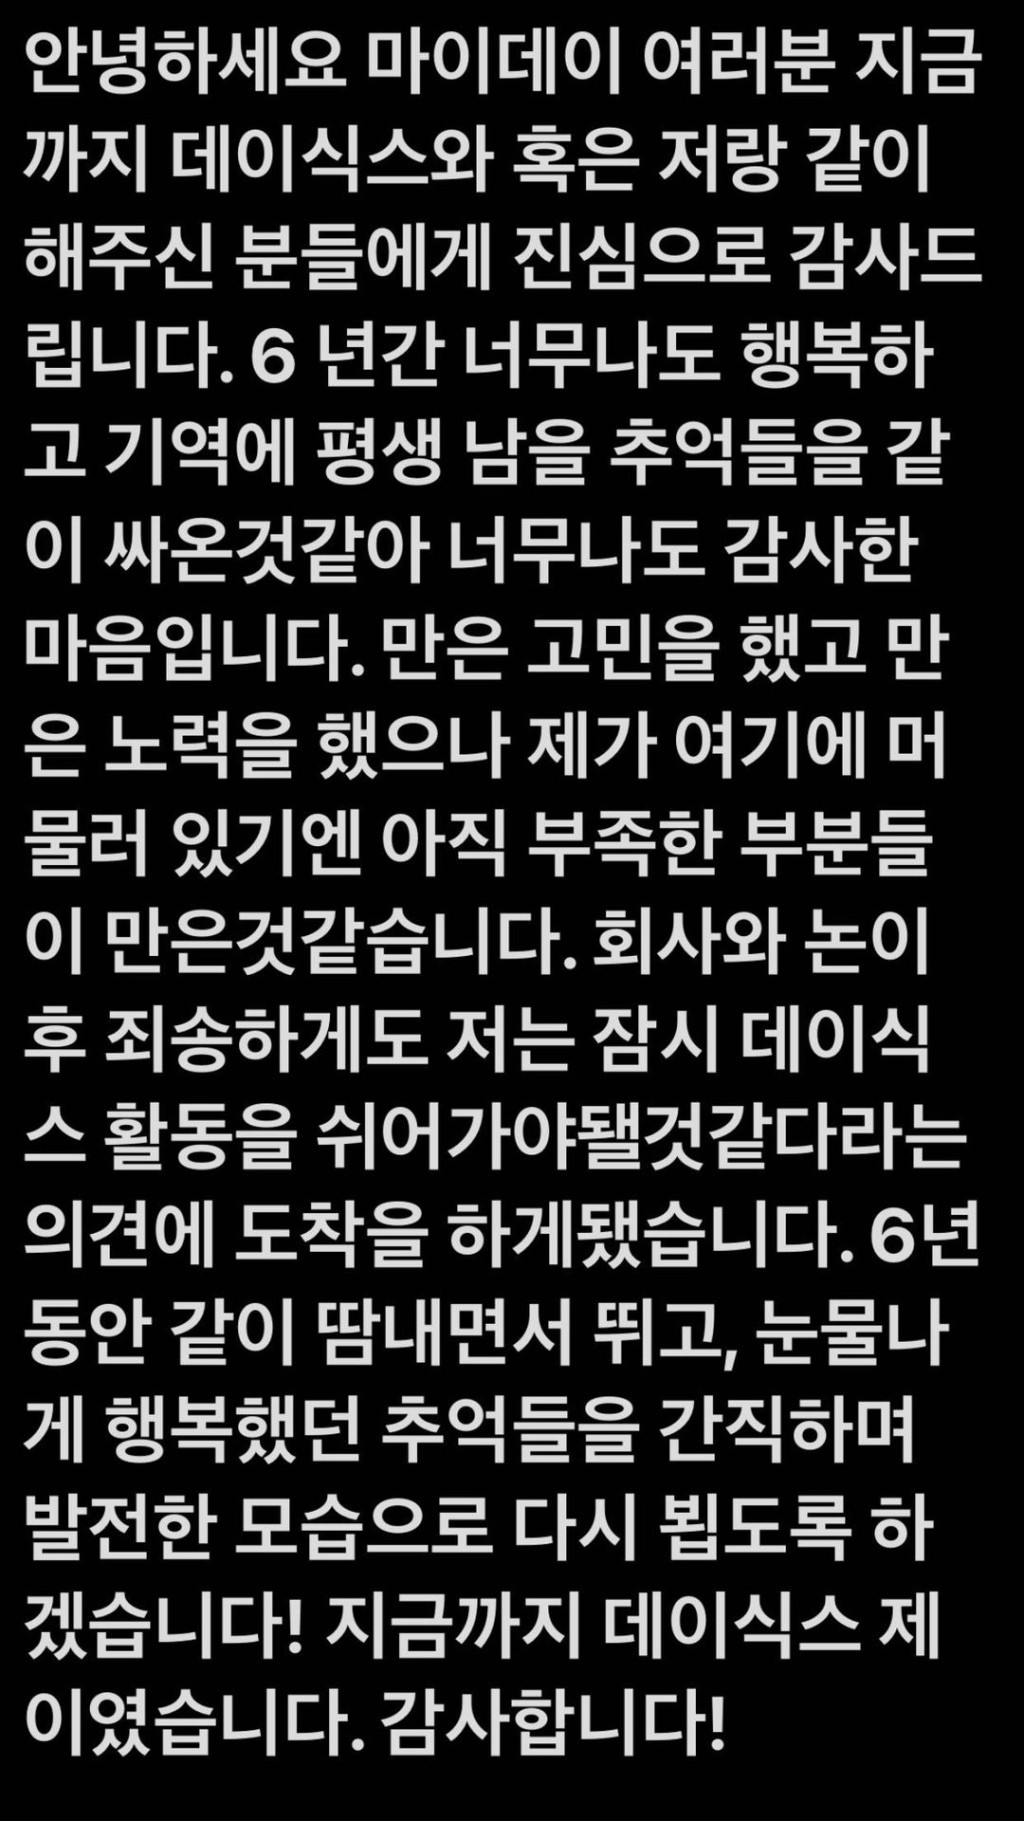 Jae於韓國時間元旦日凌晨在社交網貼文有關暫停DAY6活動消息。